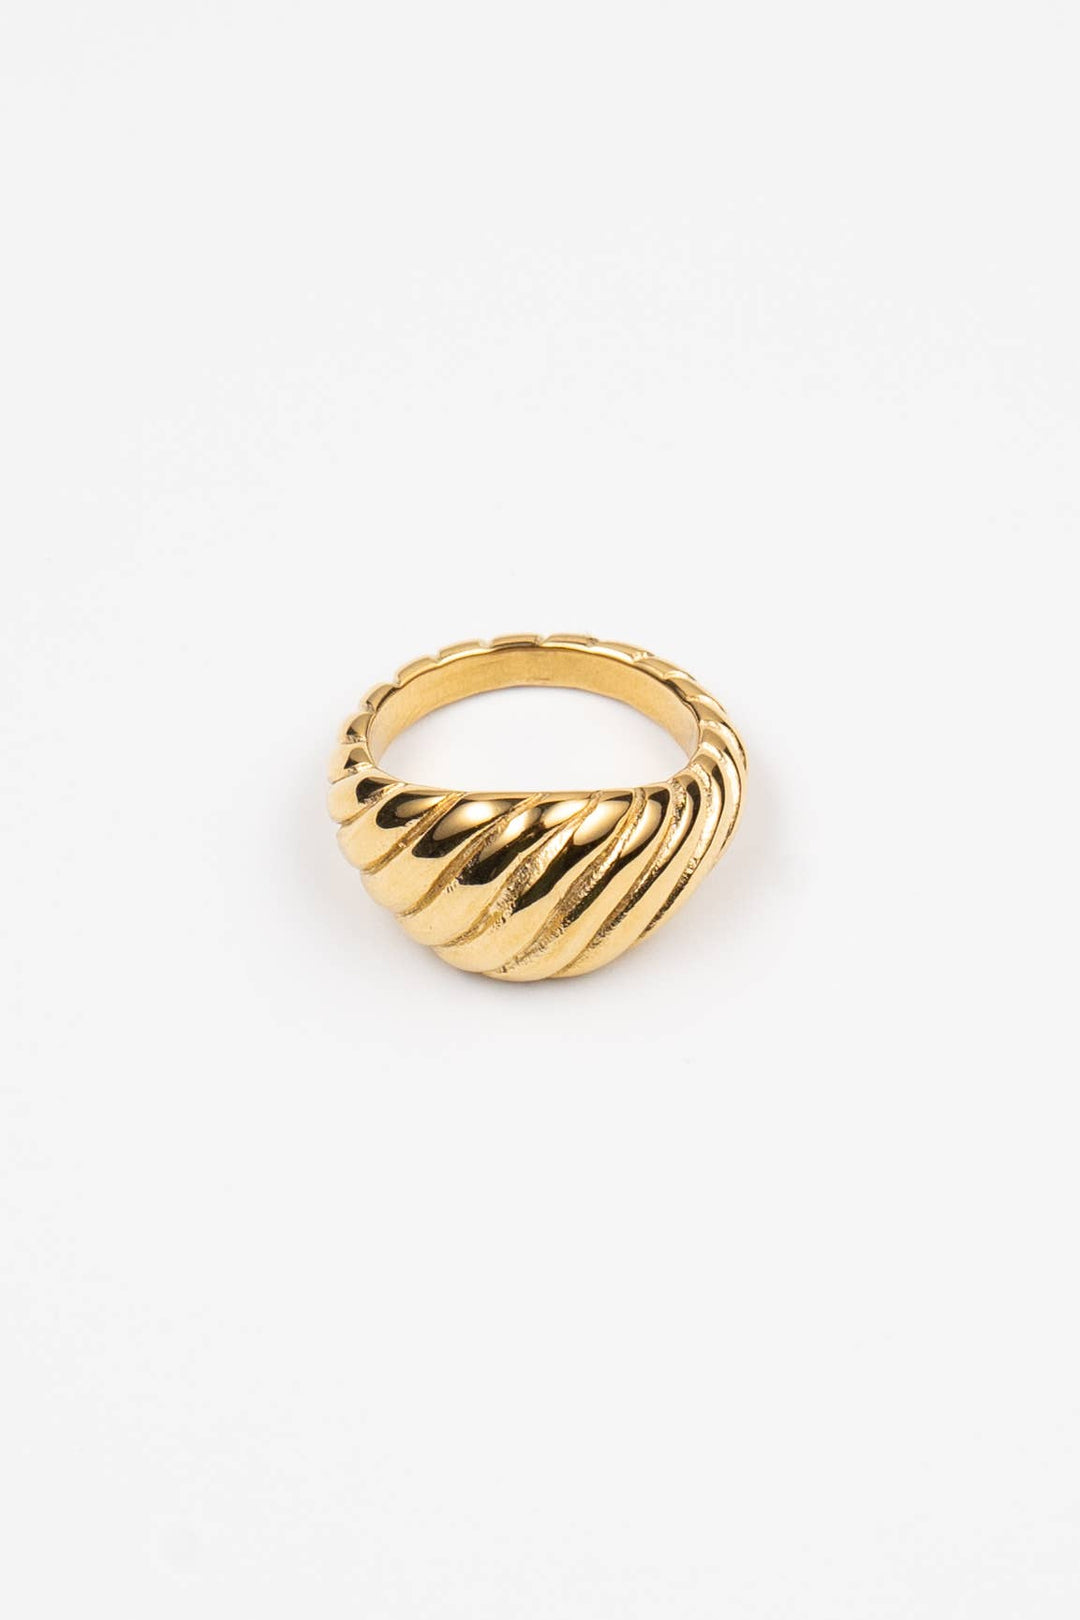 Brenda Grands Jewelry - Big Twisted Ring